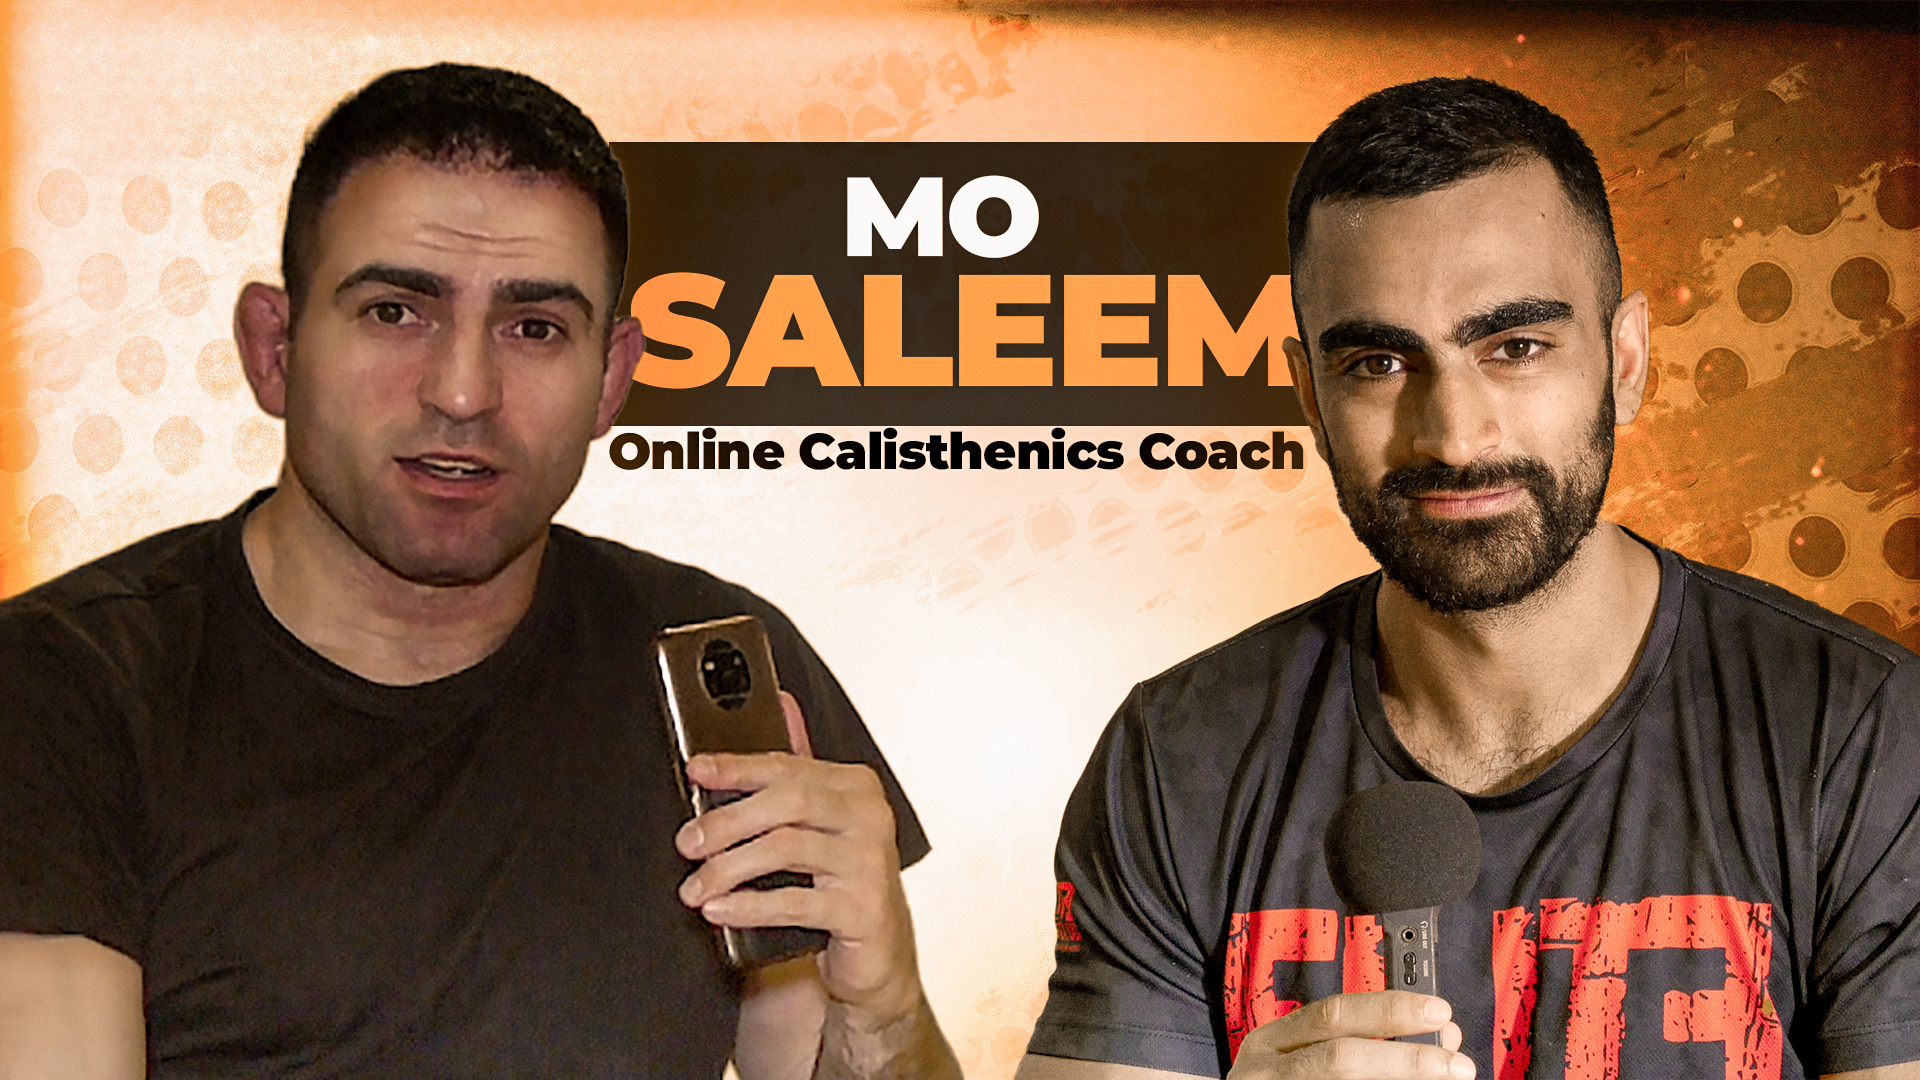 Calisthenics expert on MMA training - interview with Mo Saleem